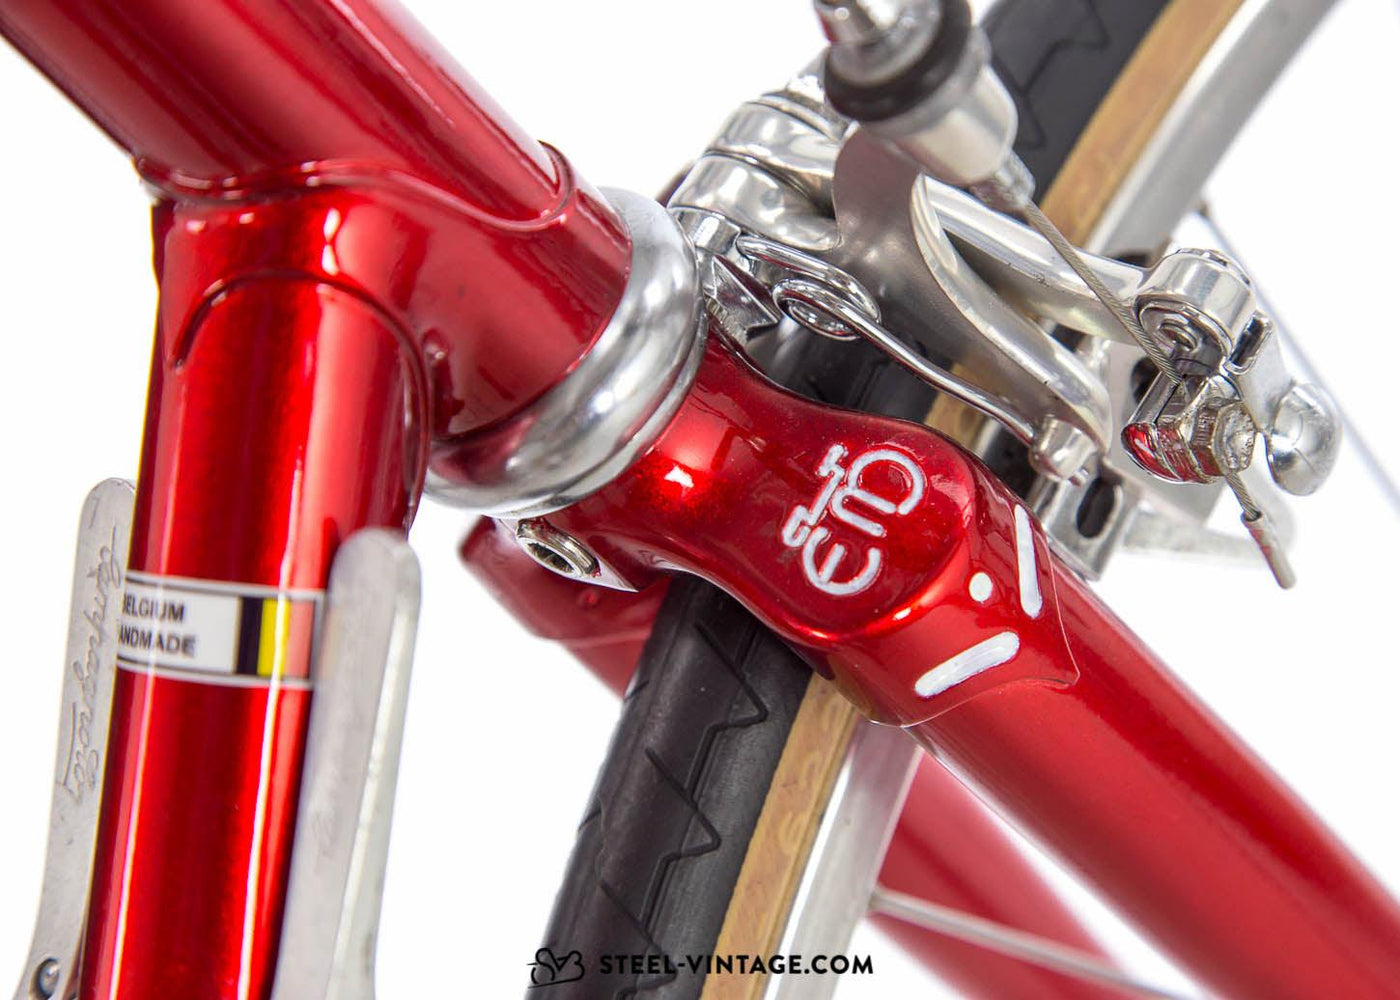 Eddy Merckx Corsa Road Bike Classic 1985 - Steel Vintage Bikes